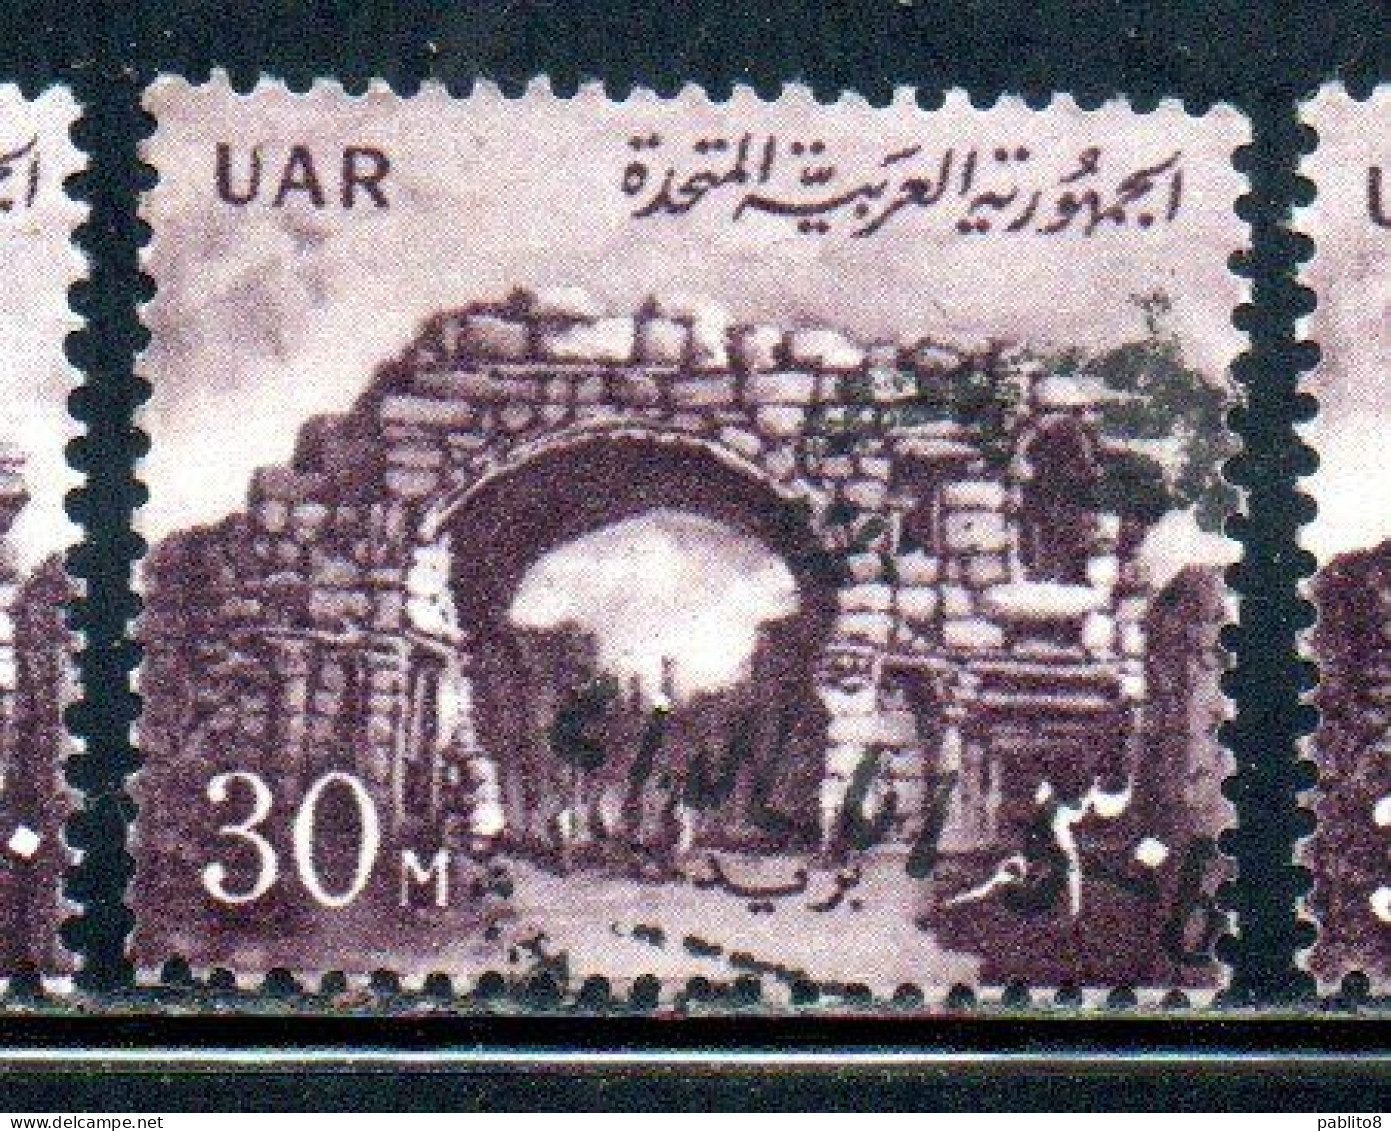 UAR EGYPT EGITTO 1959 1960 ST. SIMON'S GATE BOSRA SYRIA  30m MH - Ongebruikt